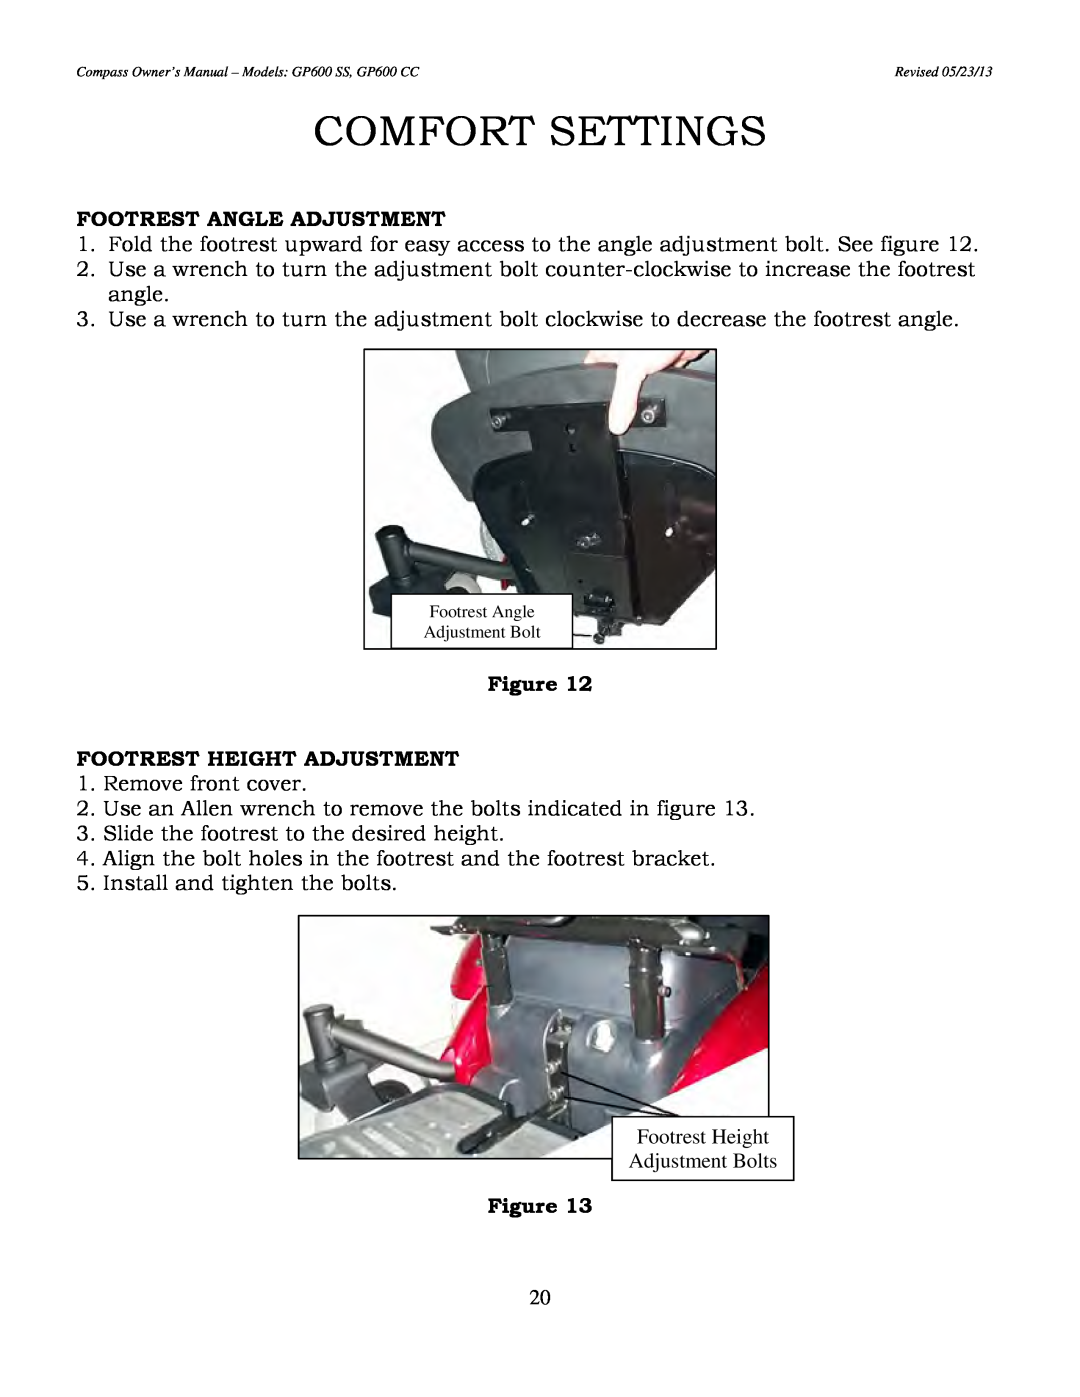 Golden Technologies GP600 SS, GP600 CC owner manual Comfort Settings, Footrest Angle Adjustment, Footrest Height Adjustment 